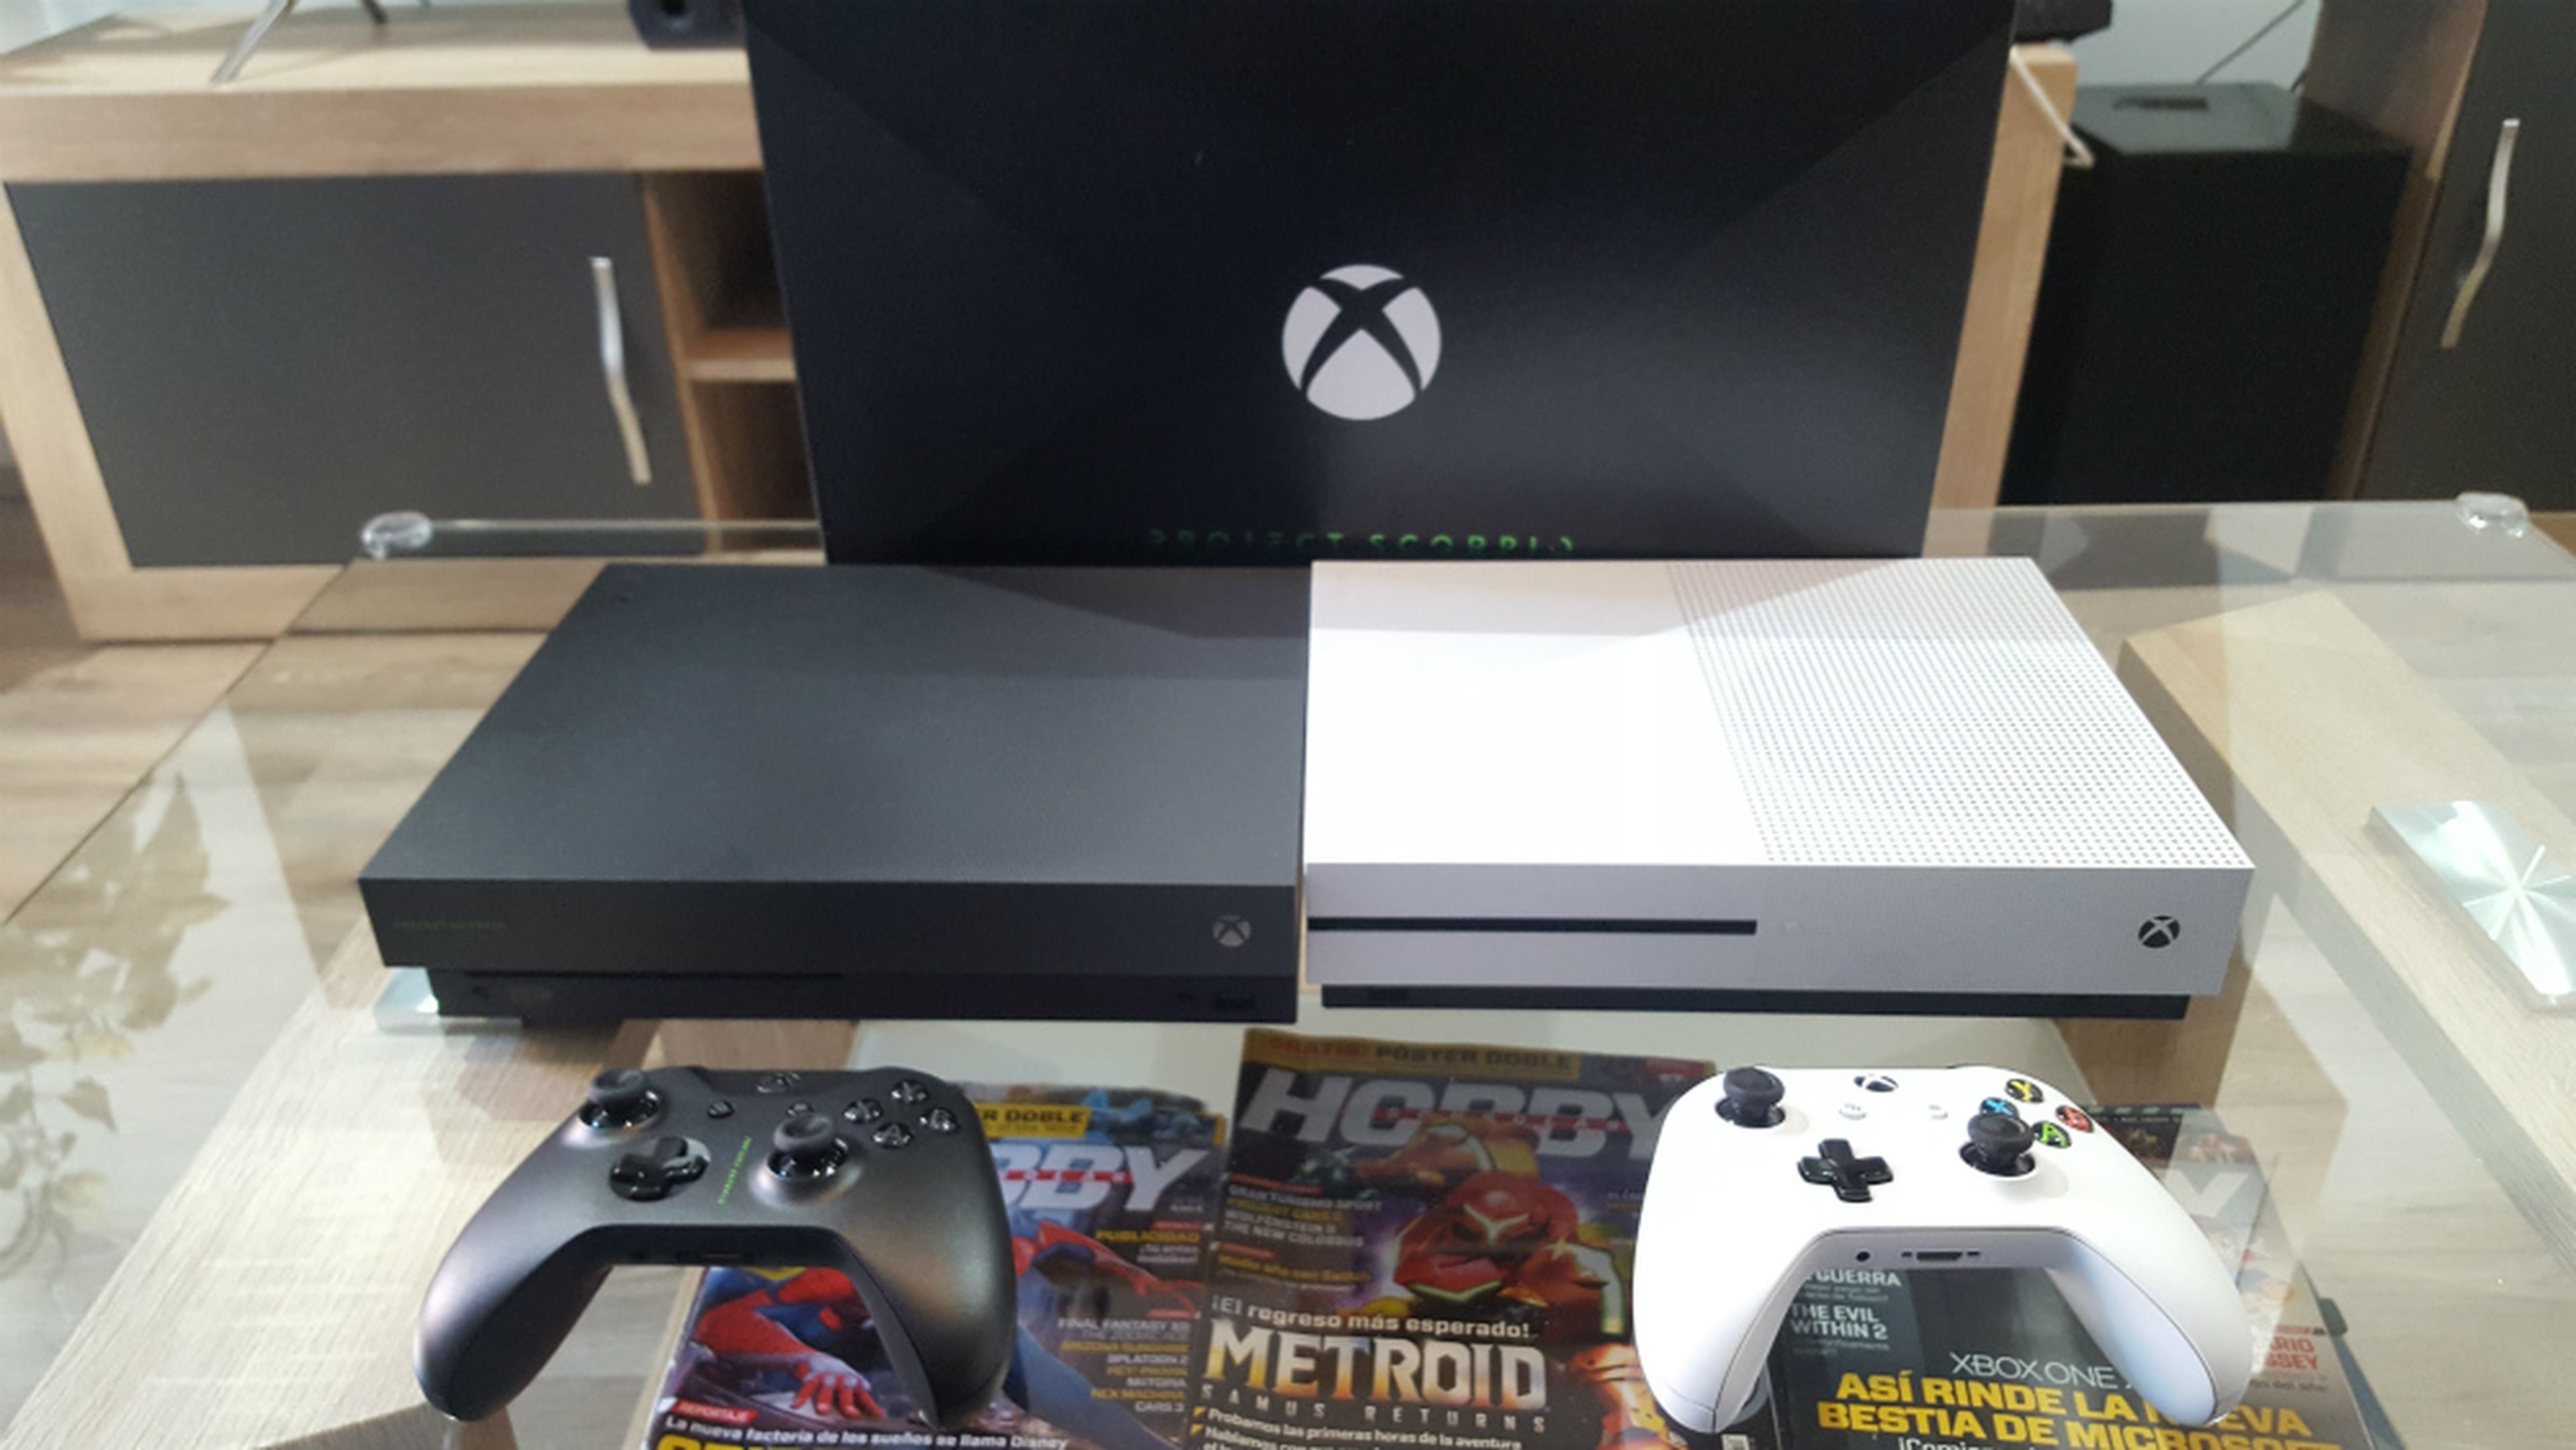 Comprar Microsoft Xbox One S 500 GB [mando inalámbrico incluído